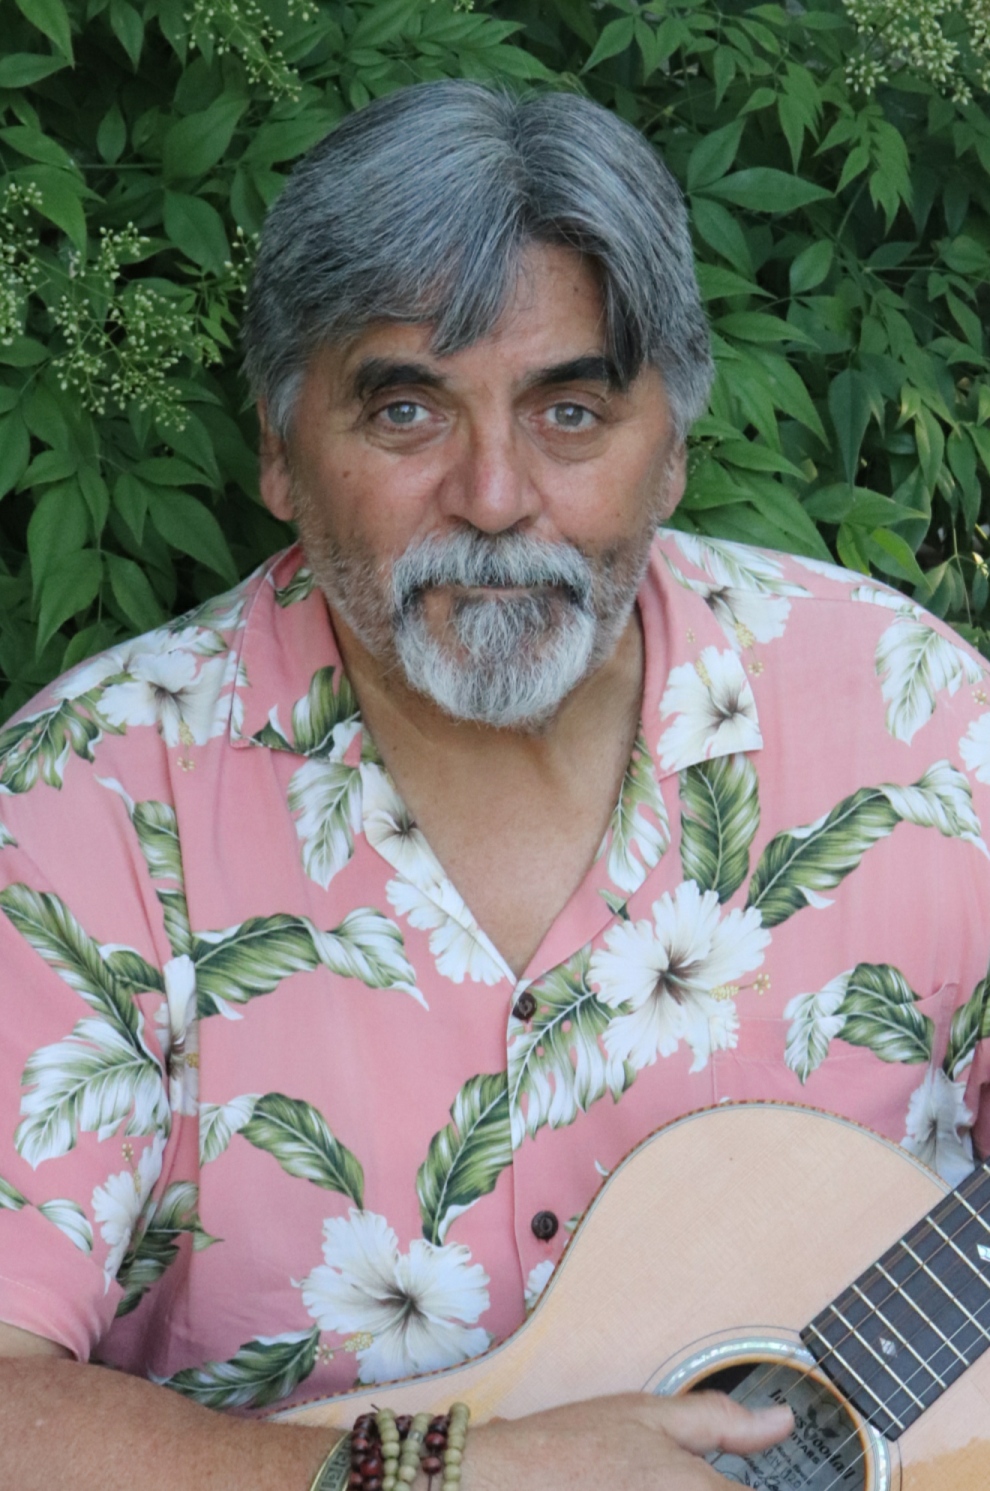 Markmin pink Hawaiian shirt holding guitar